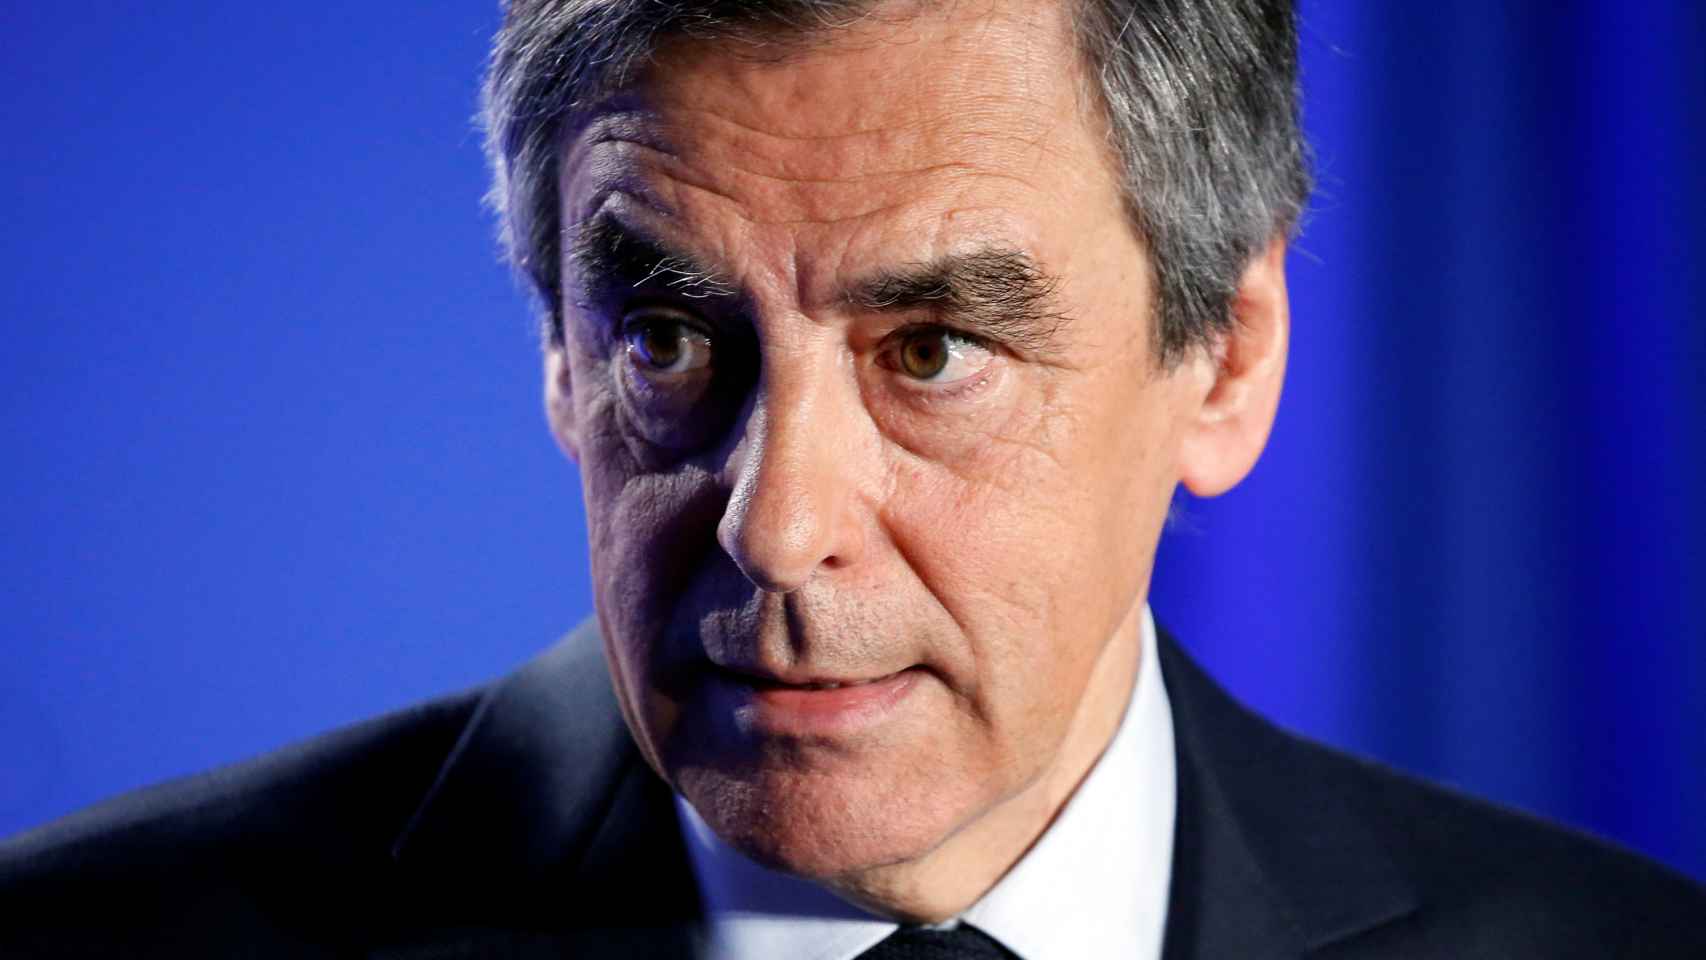 El candidato conservador, François Fillon.